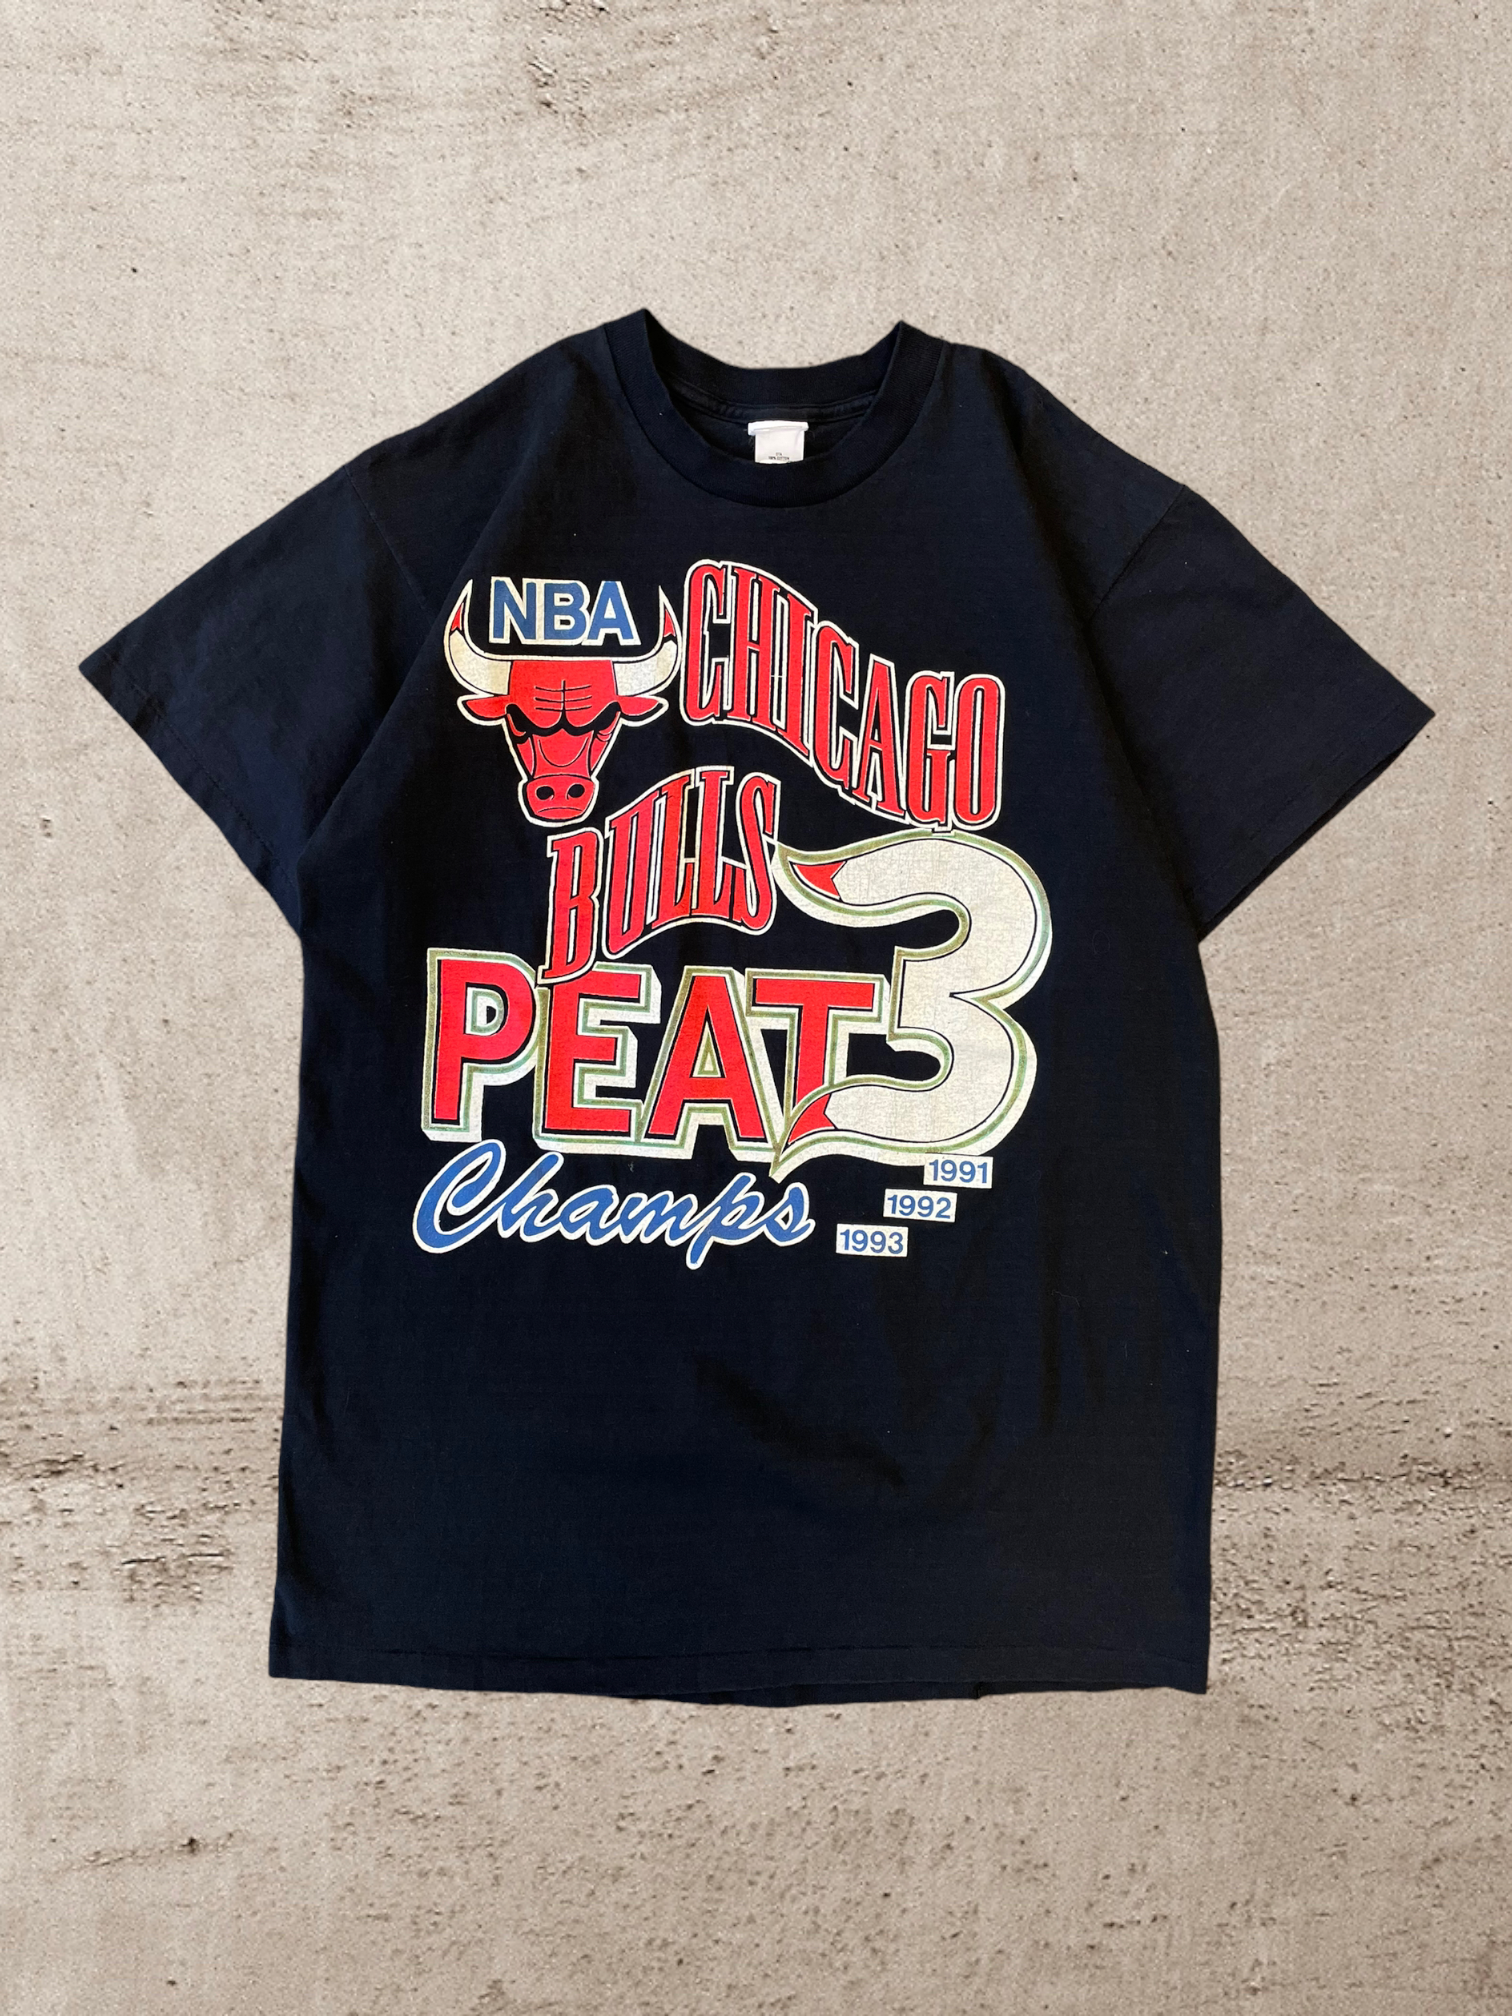 1993 Chicago Bulls 3-Peat T-Shirt - Large